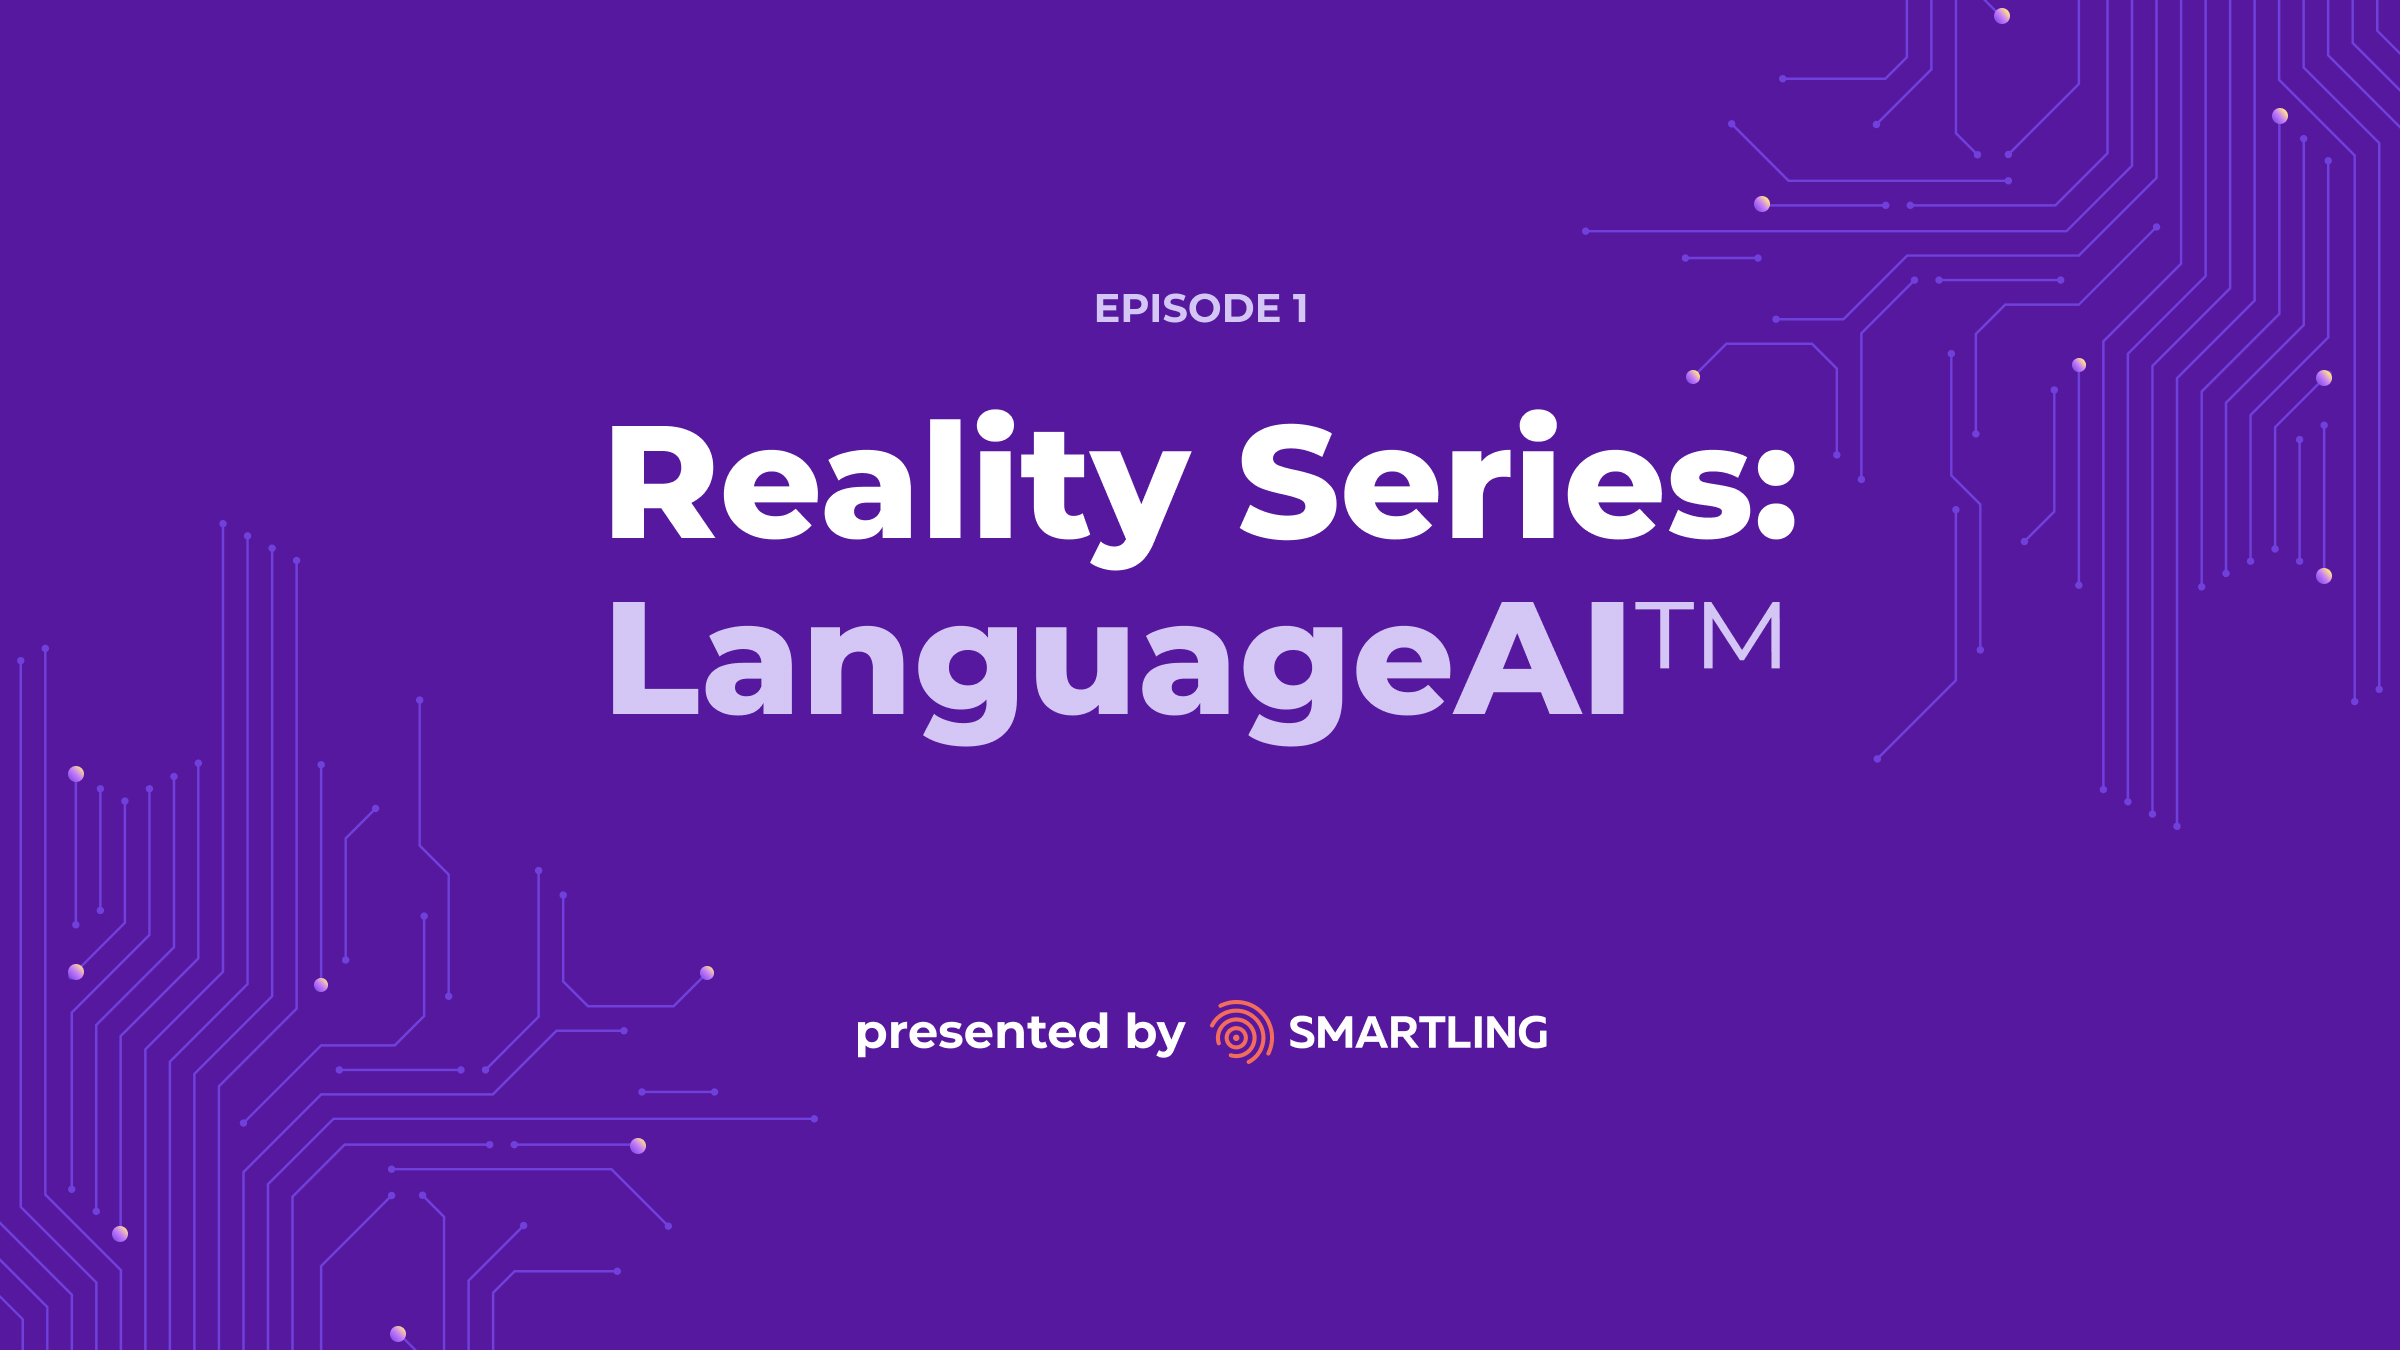 Smartling's Reality series - Episode 1 LanguageAI™